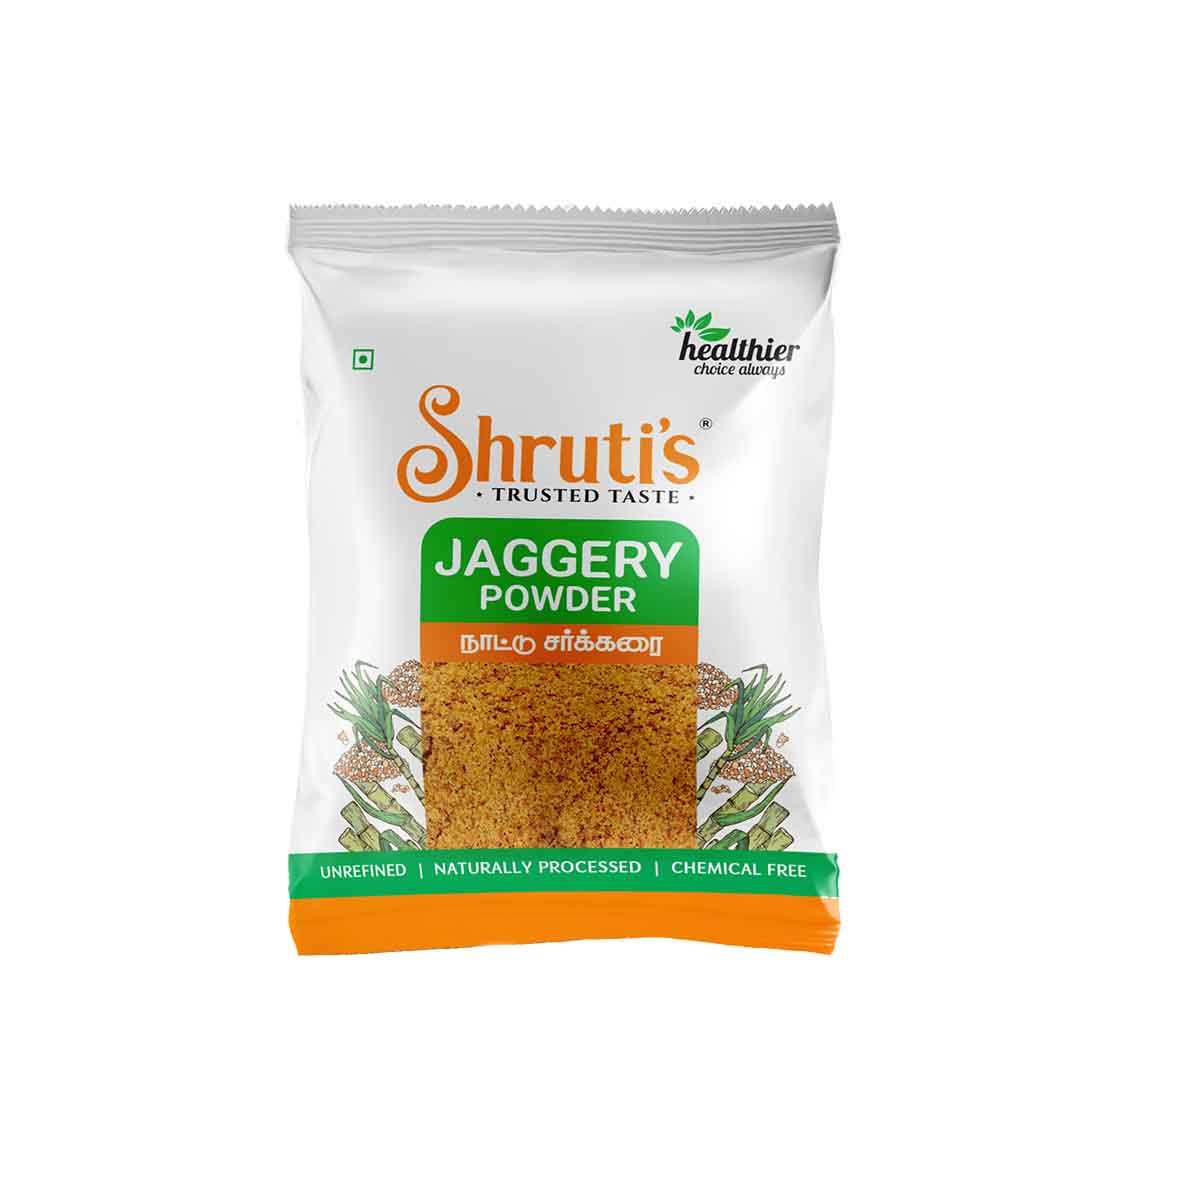 Shrutis Cane Jaggery Powder 225 gm pouch